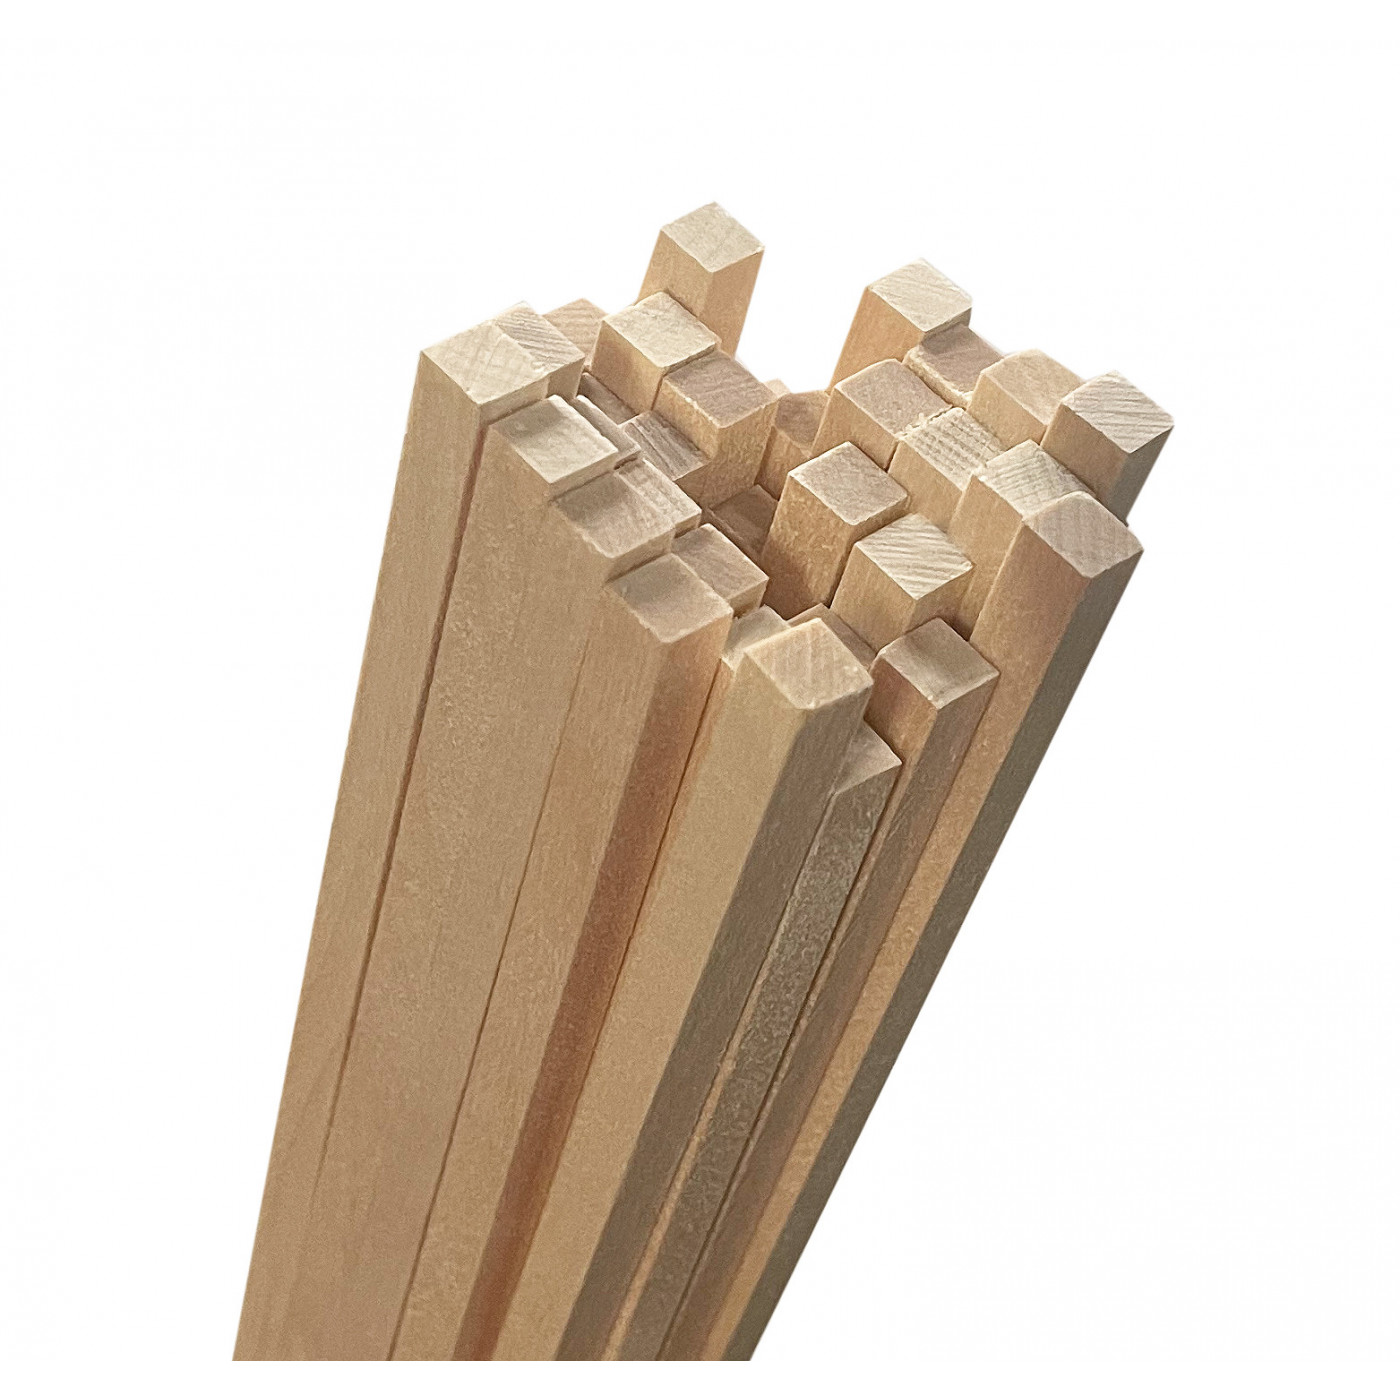 Set of 50 wooden sticks (square, 8x8 mm, 70 cm length, birch wood